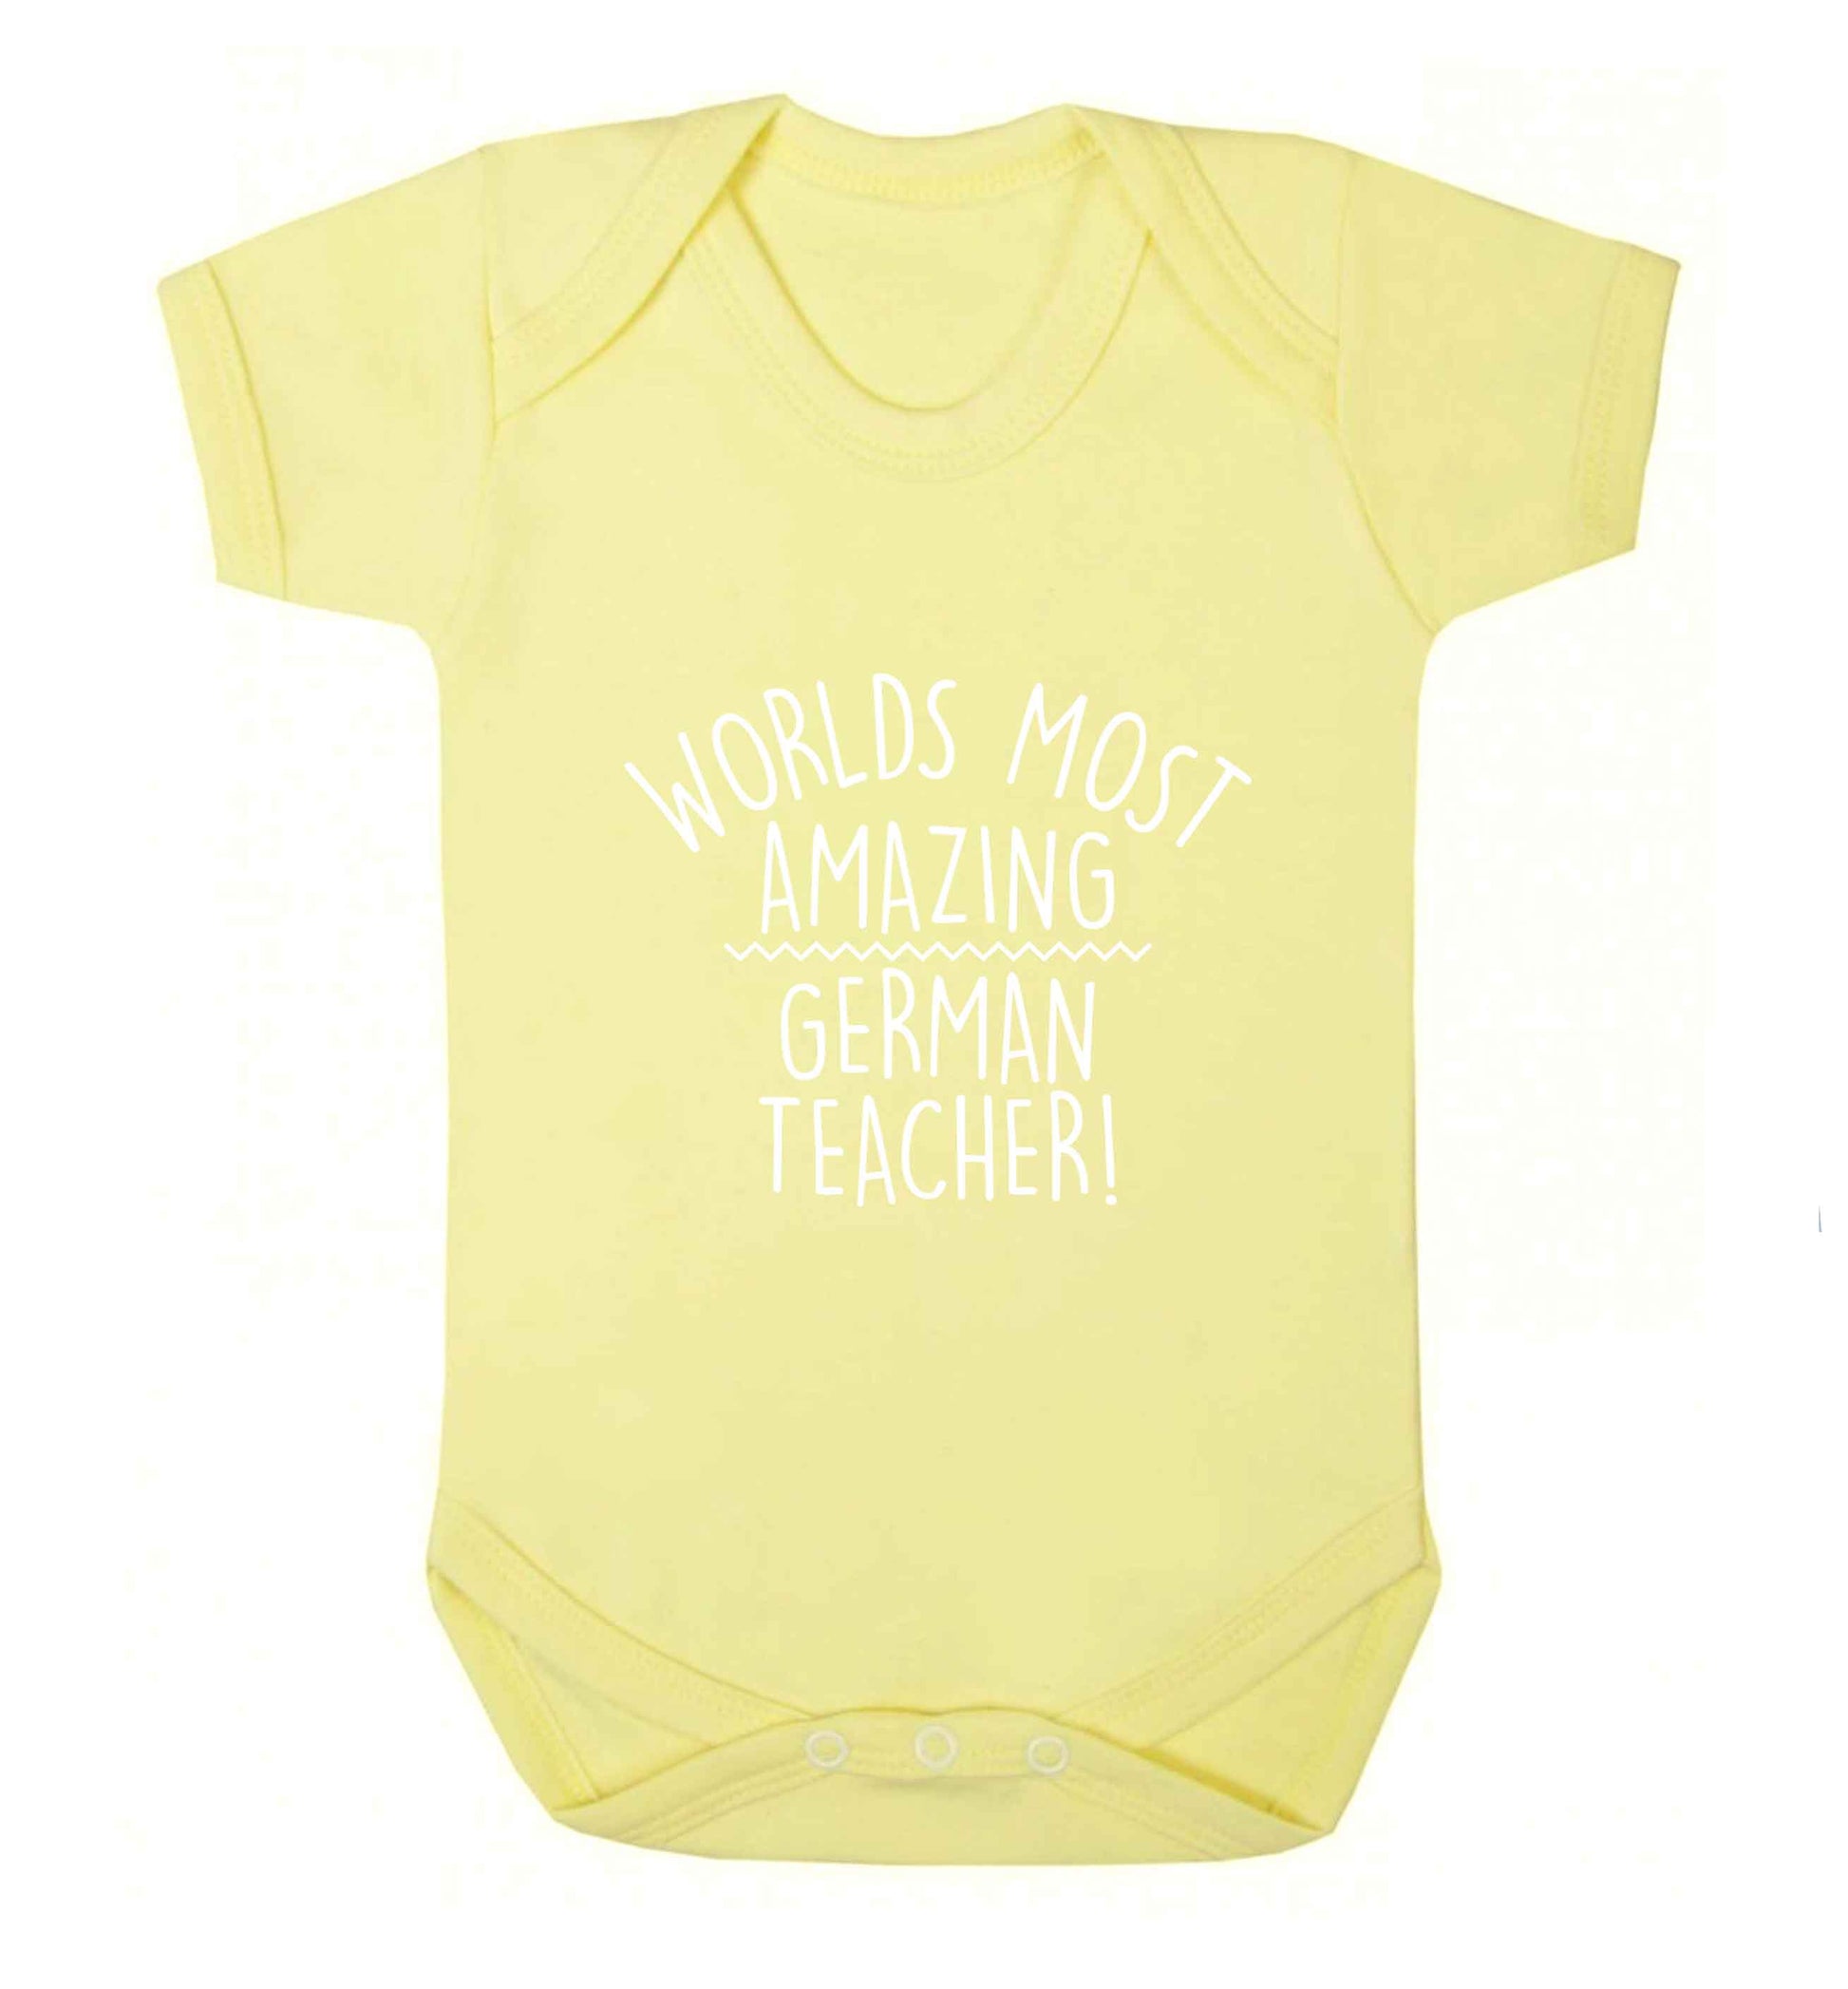 Worlds most amazing German teacher baby vest pale yellow 18-24 months